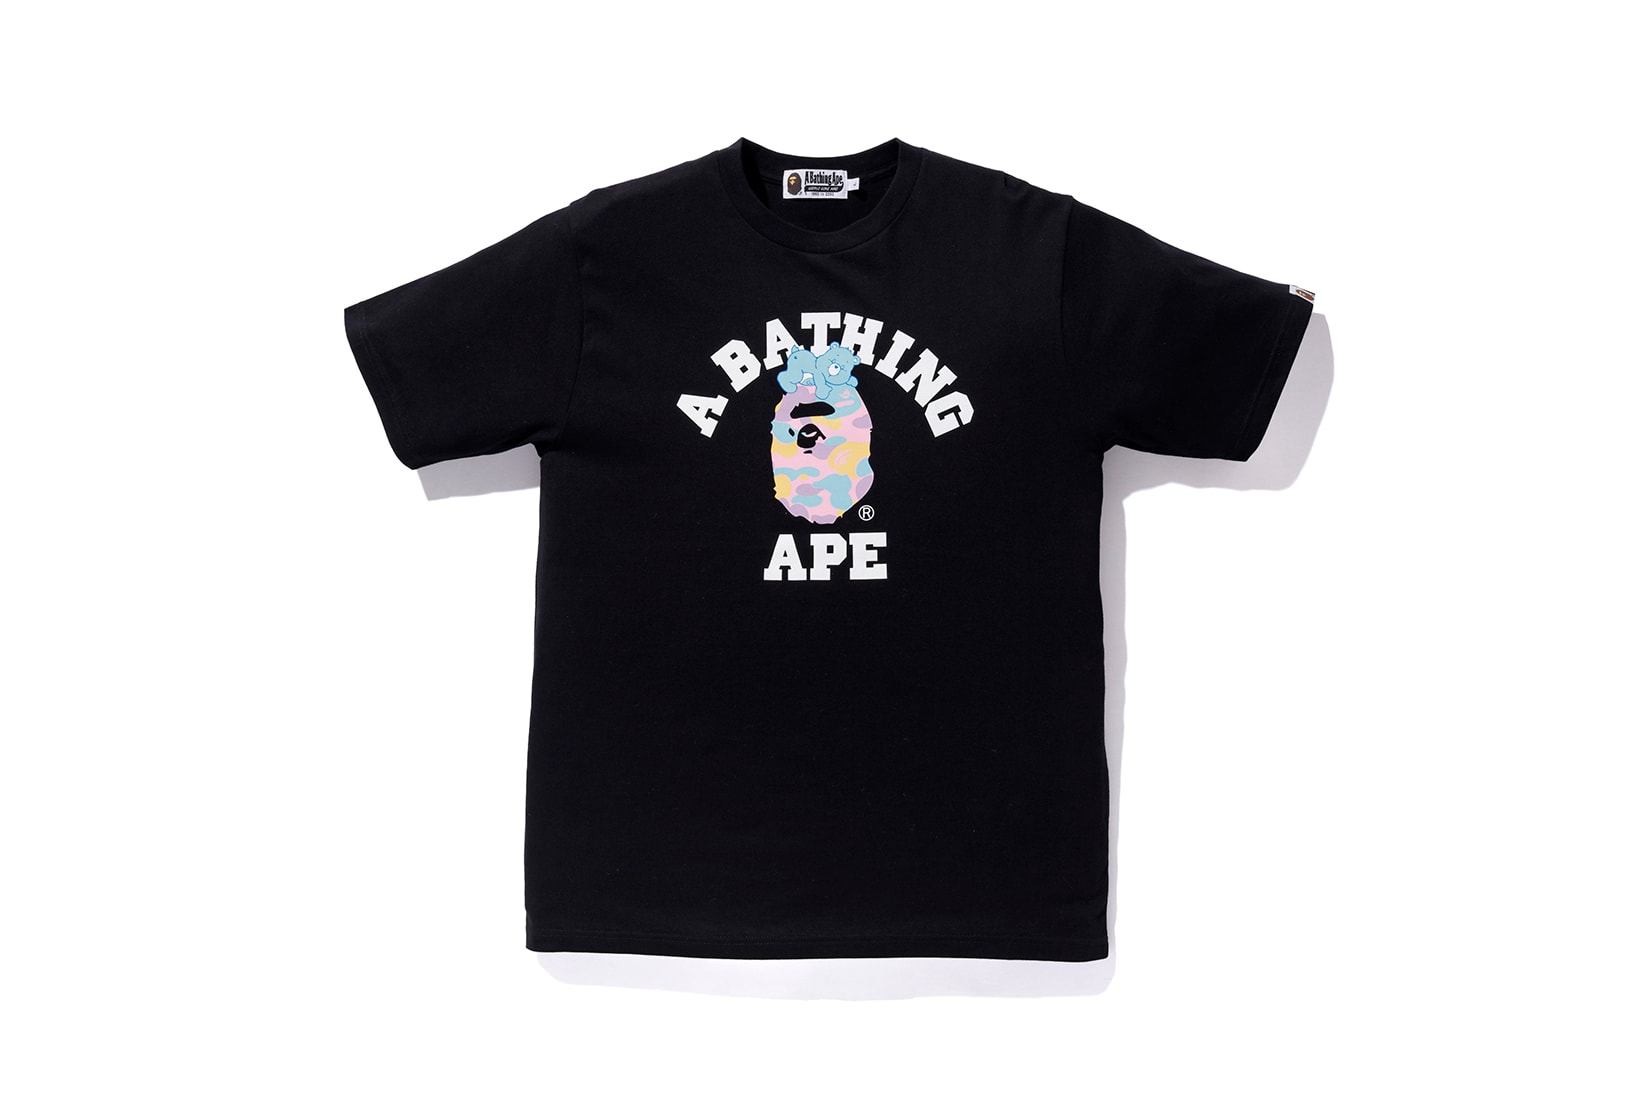 Care Bears x BAPE Collection Logo T-Shirt Black